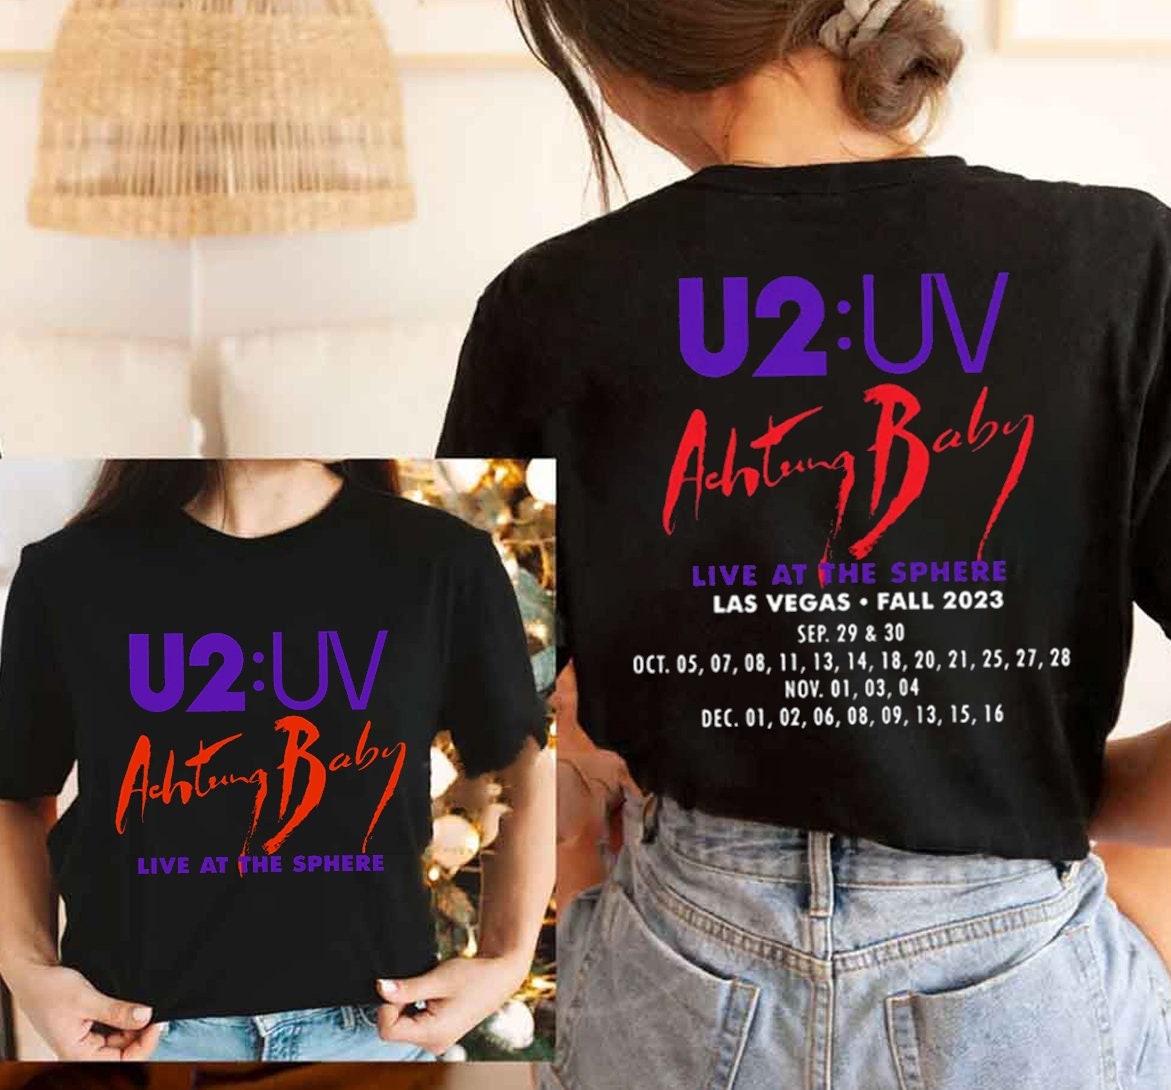 Discover U2 Achtung Baby Live at Sphere T-Shirt, U2 Las Vegas Fall Tour 2023 Shirt